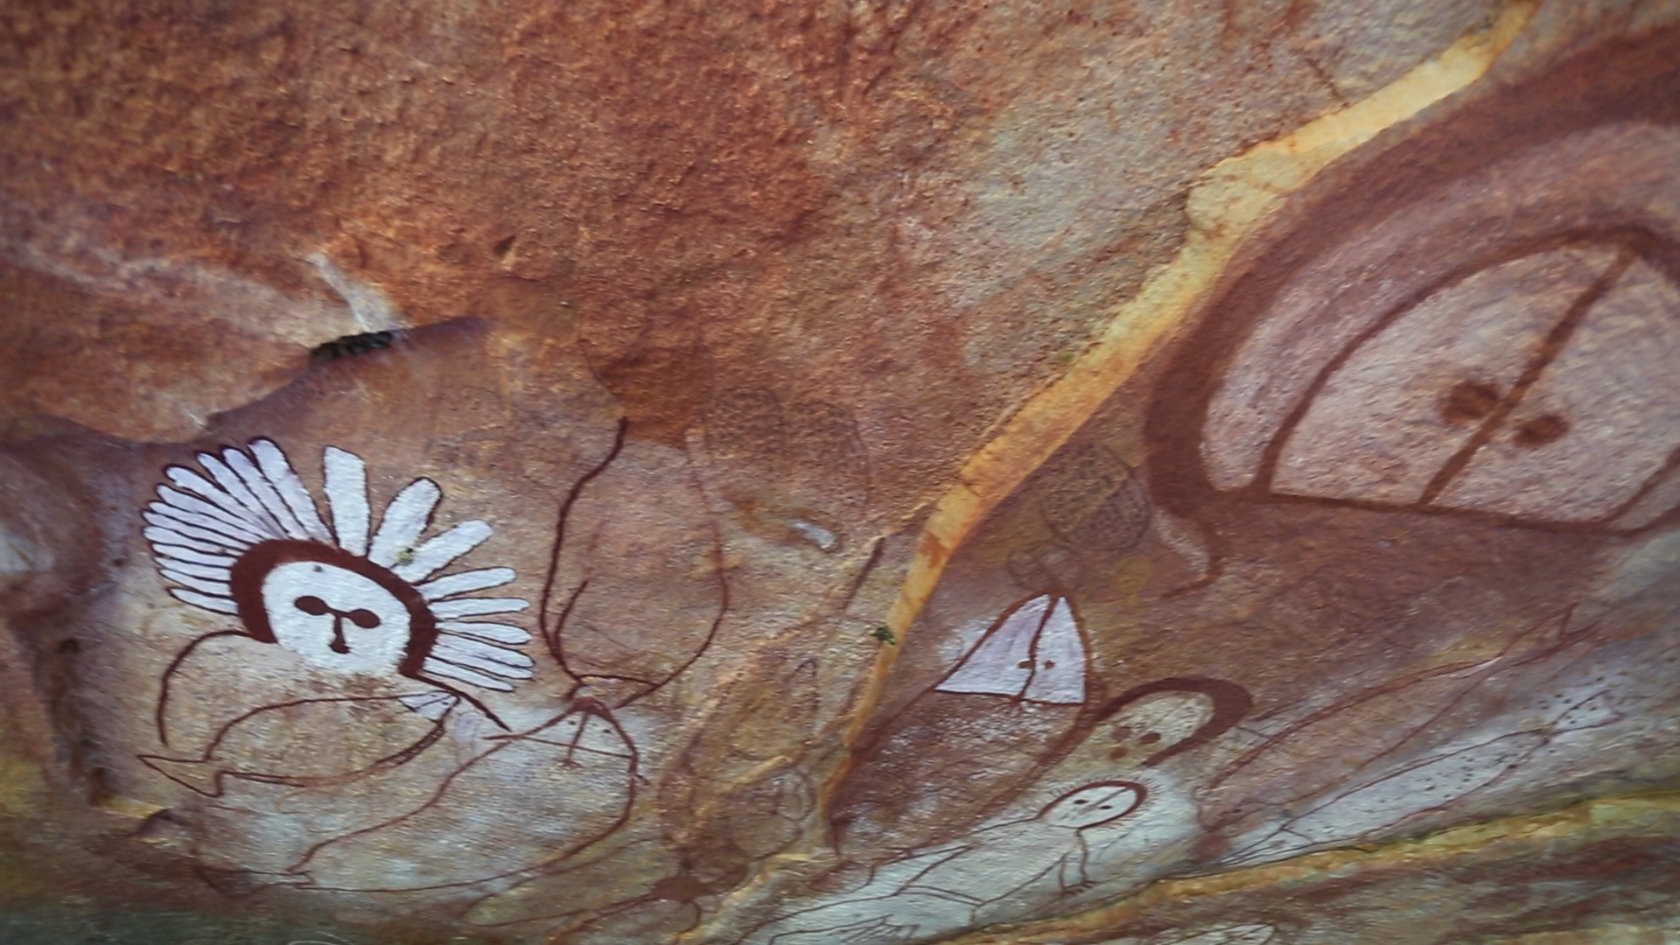 Kimberley, Western Australia rock art